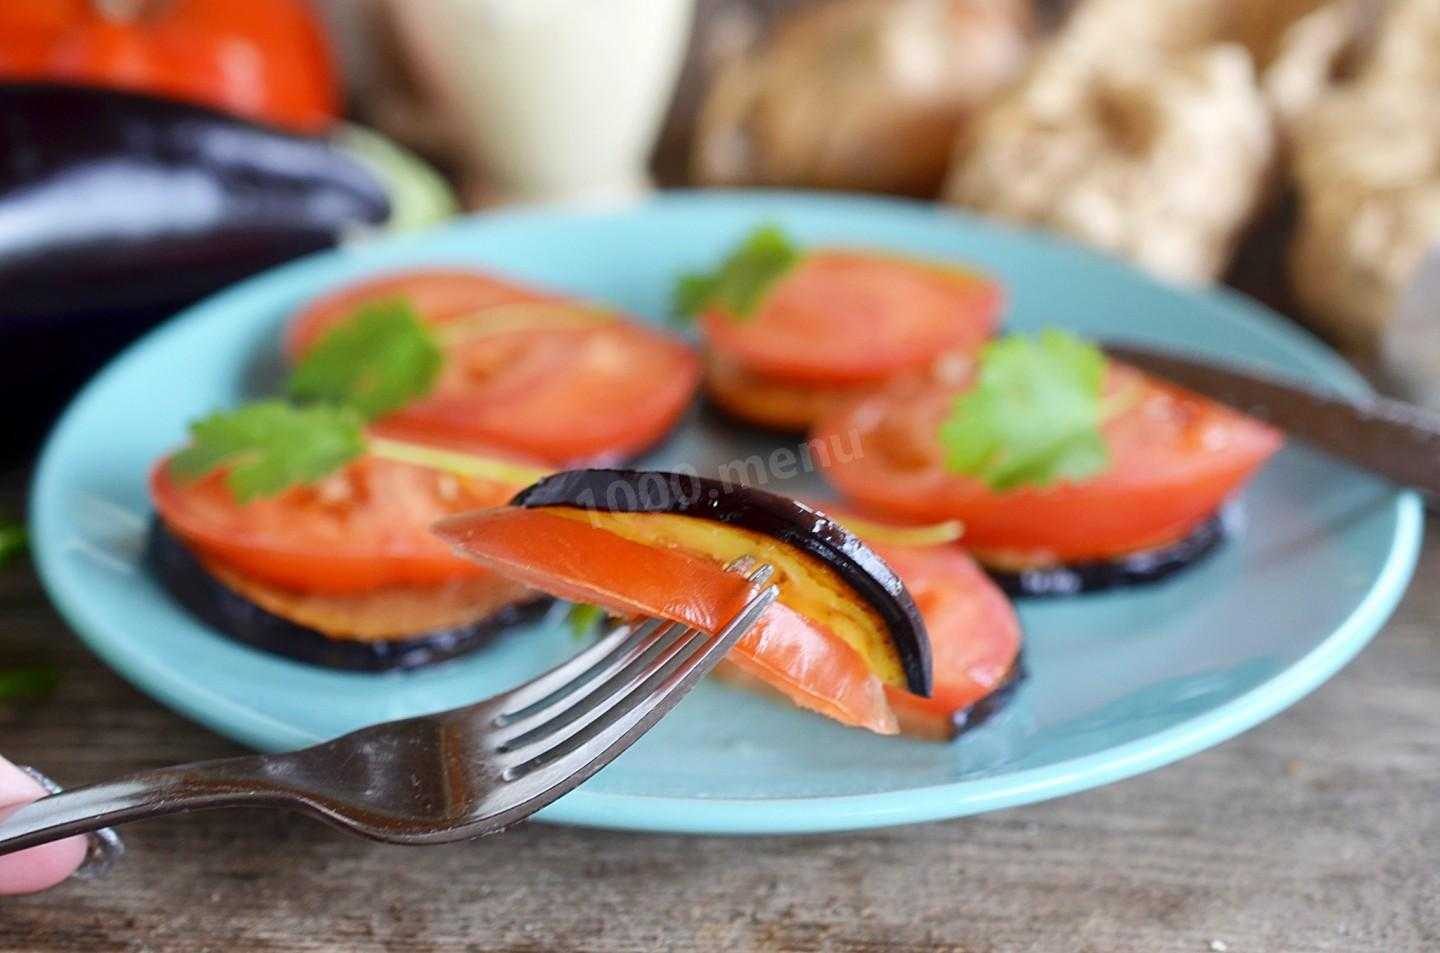 Салат с хрустящими баклажанами и помидорами по грузински рецепт с фото пошагово и видео - 1000.menu